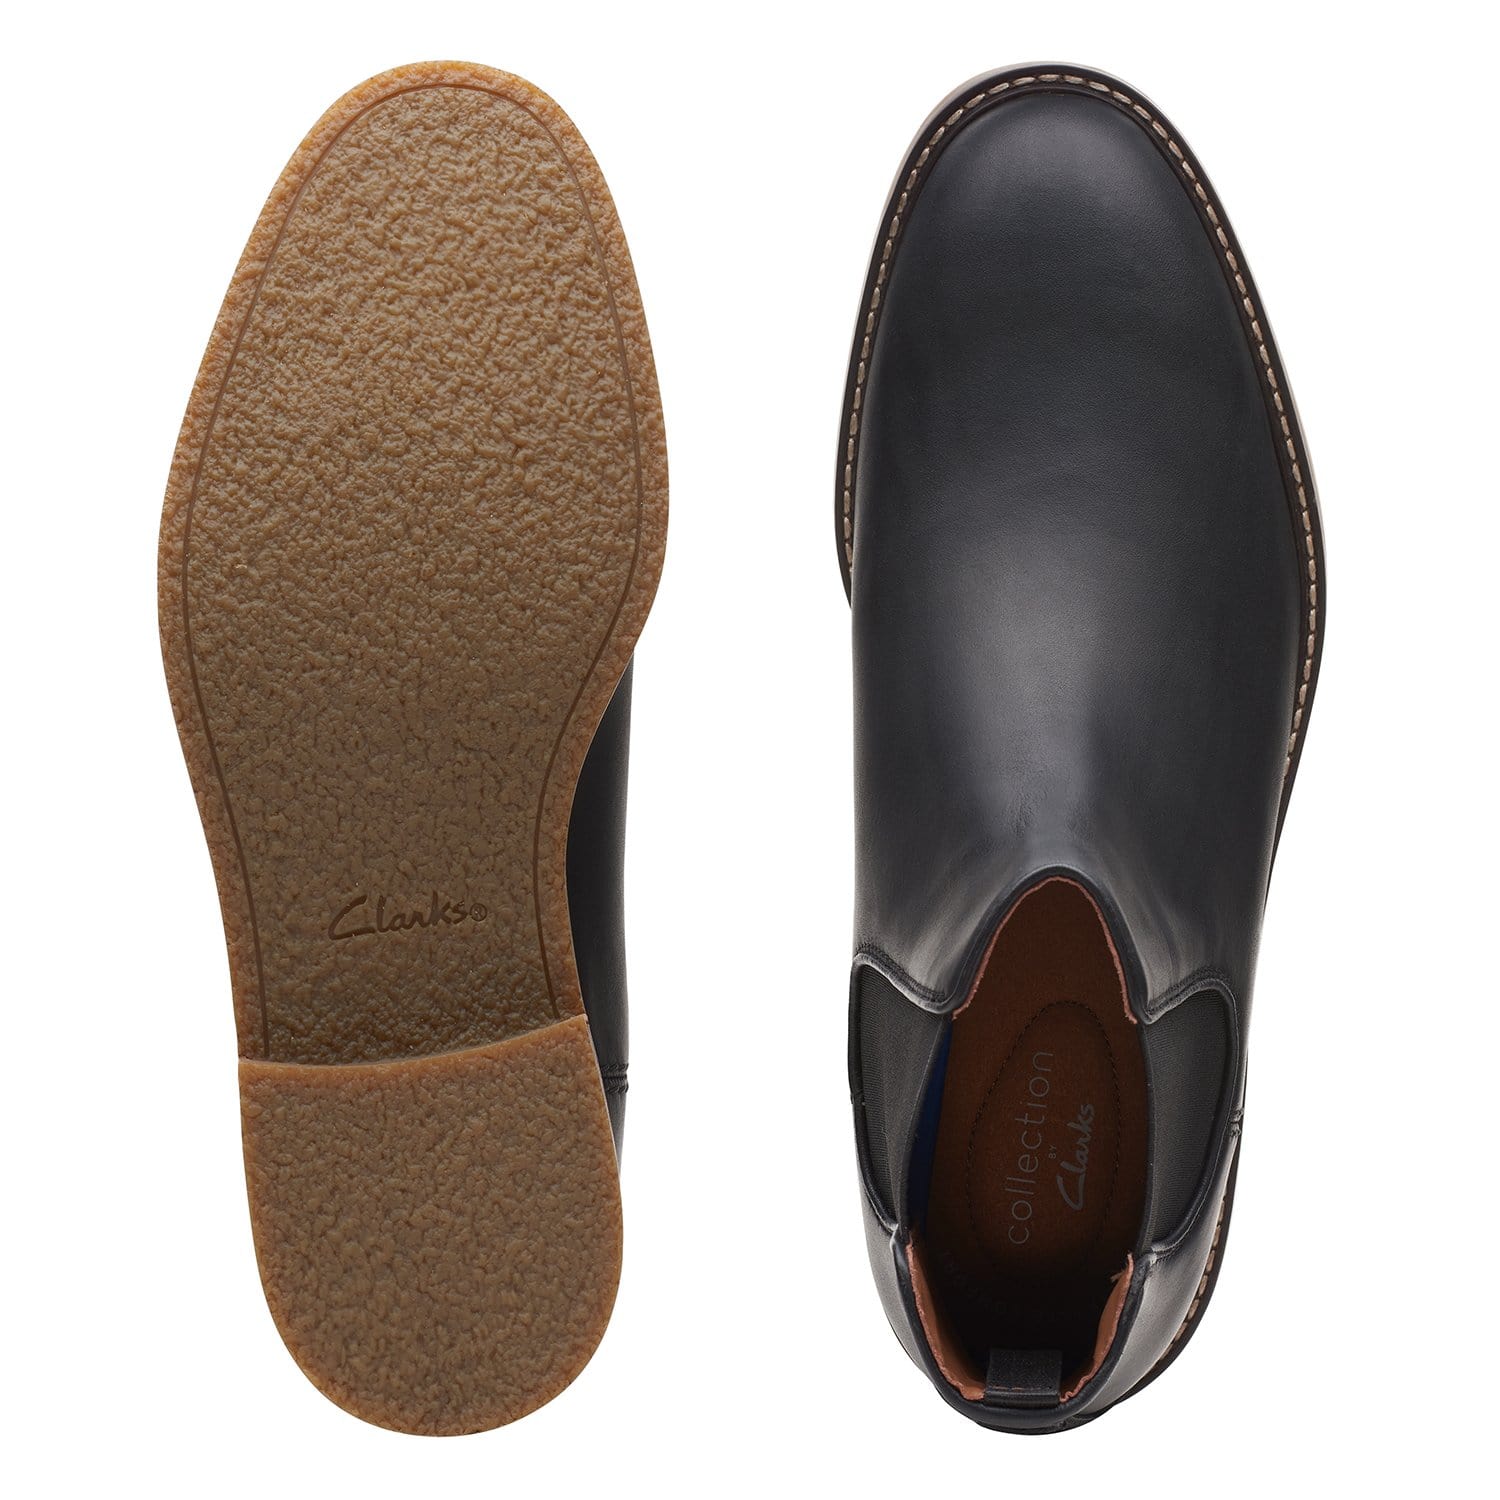 Clarks Jaxen Chelsea - Boots - Black Leather - 261627297 - G Width (Standard Fit)